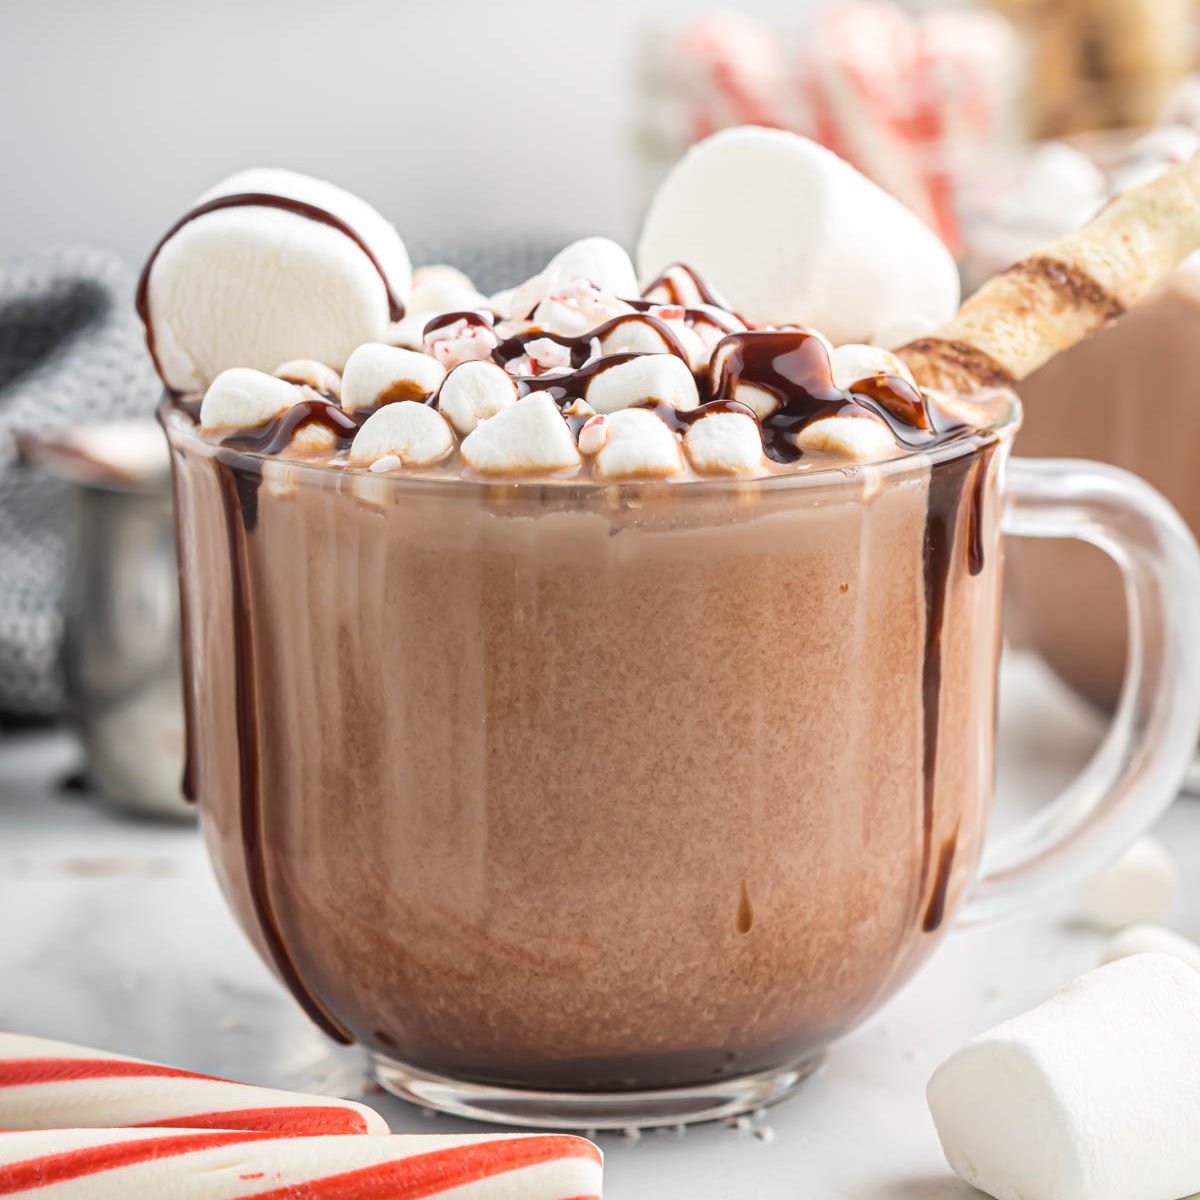 https://www.eatingonadime.com/wp-content/uploads/2020/12/1200-x-1800-Crock-Pot-Hot-Chocolate-17-of-18-1.jpg